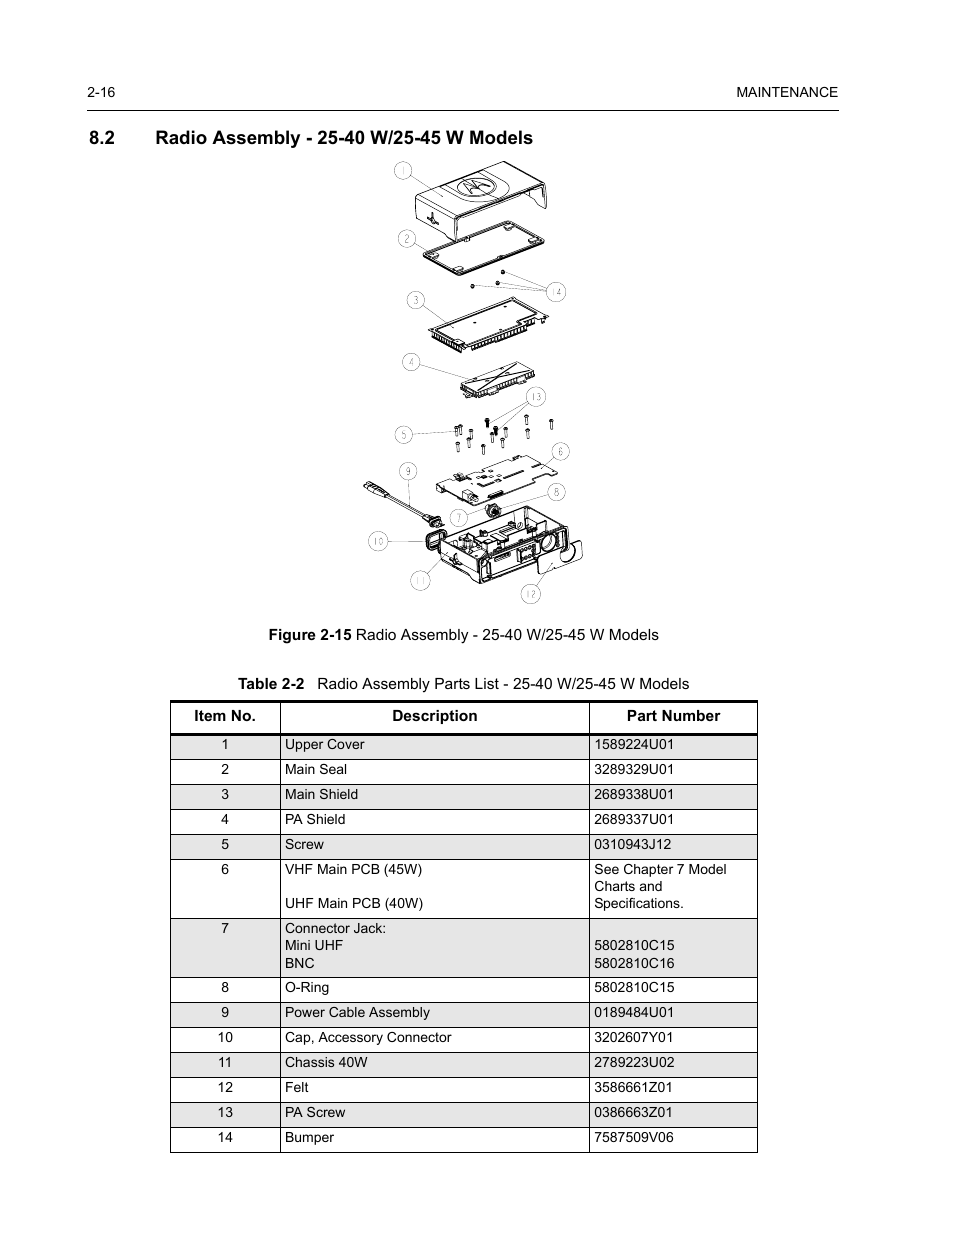 2 radio assembly - 25-40 w/25-45 w models | Nikon RADIUS CM200 User Manual | Page 30 / 70